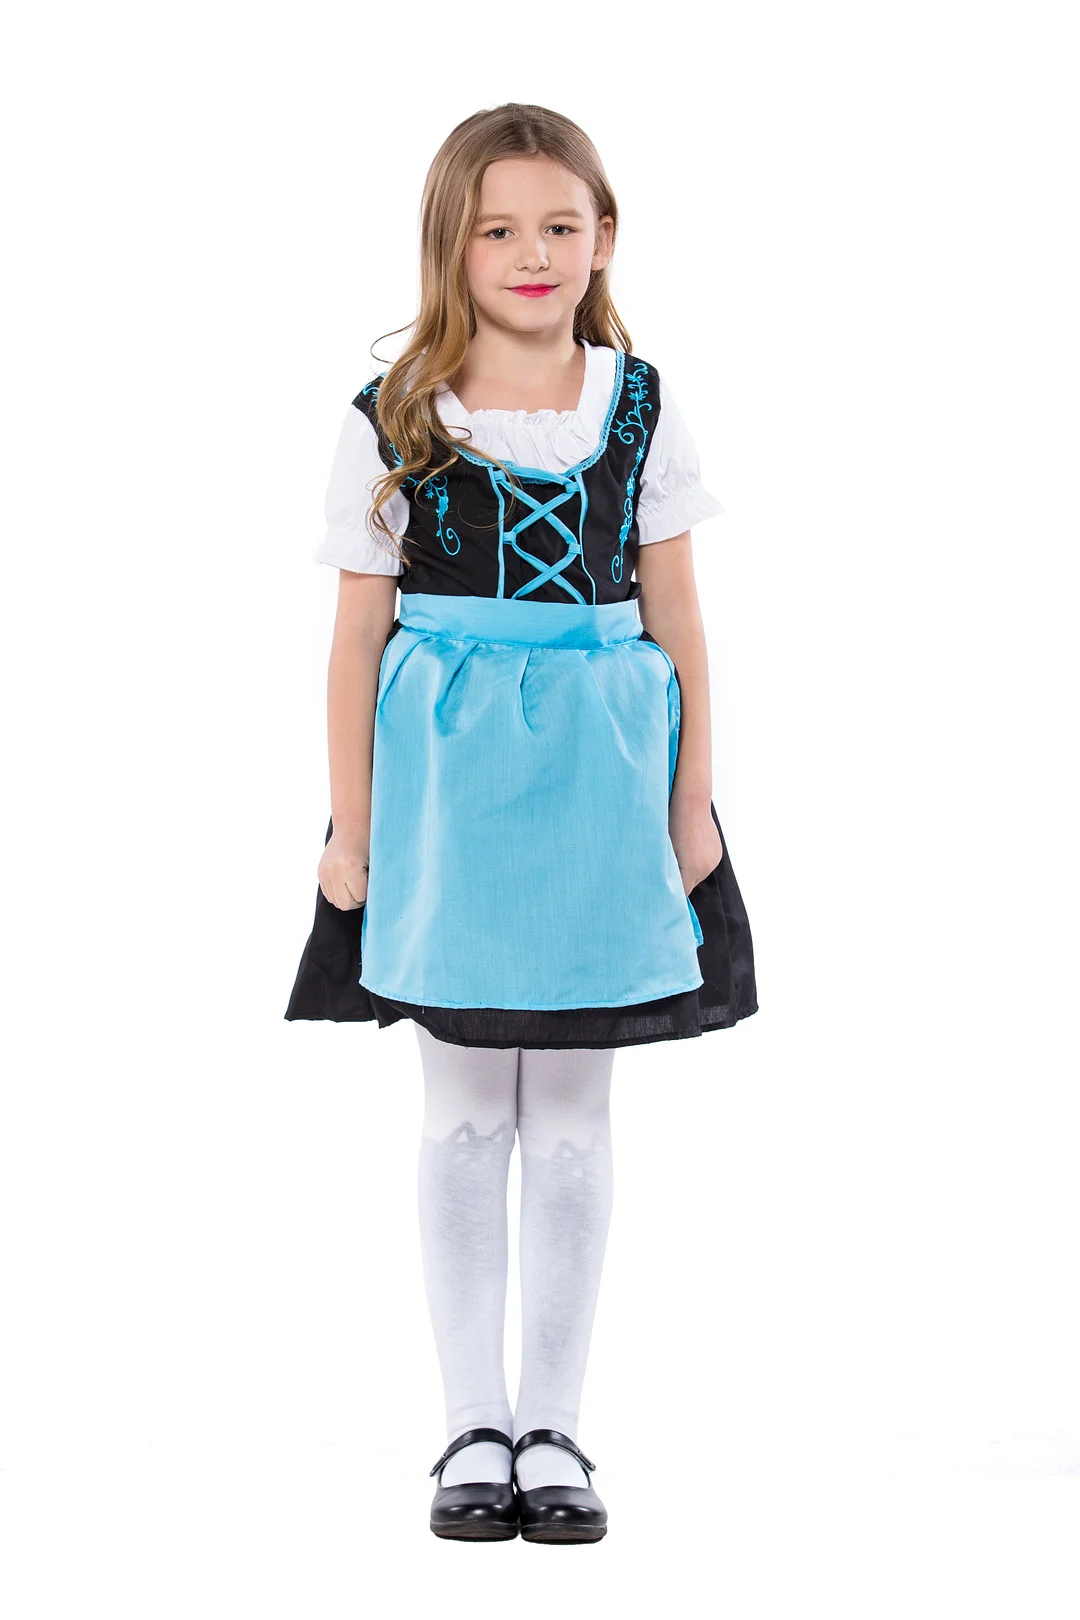 Girls German Dirndl Dress Oktoberfest Fraulein Costume